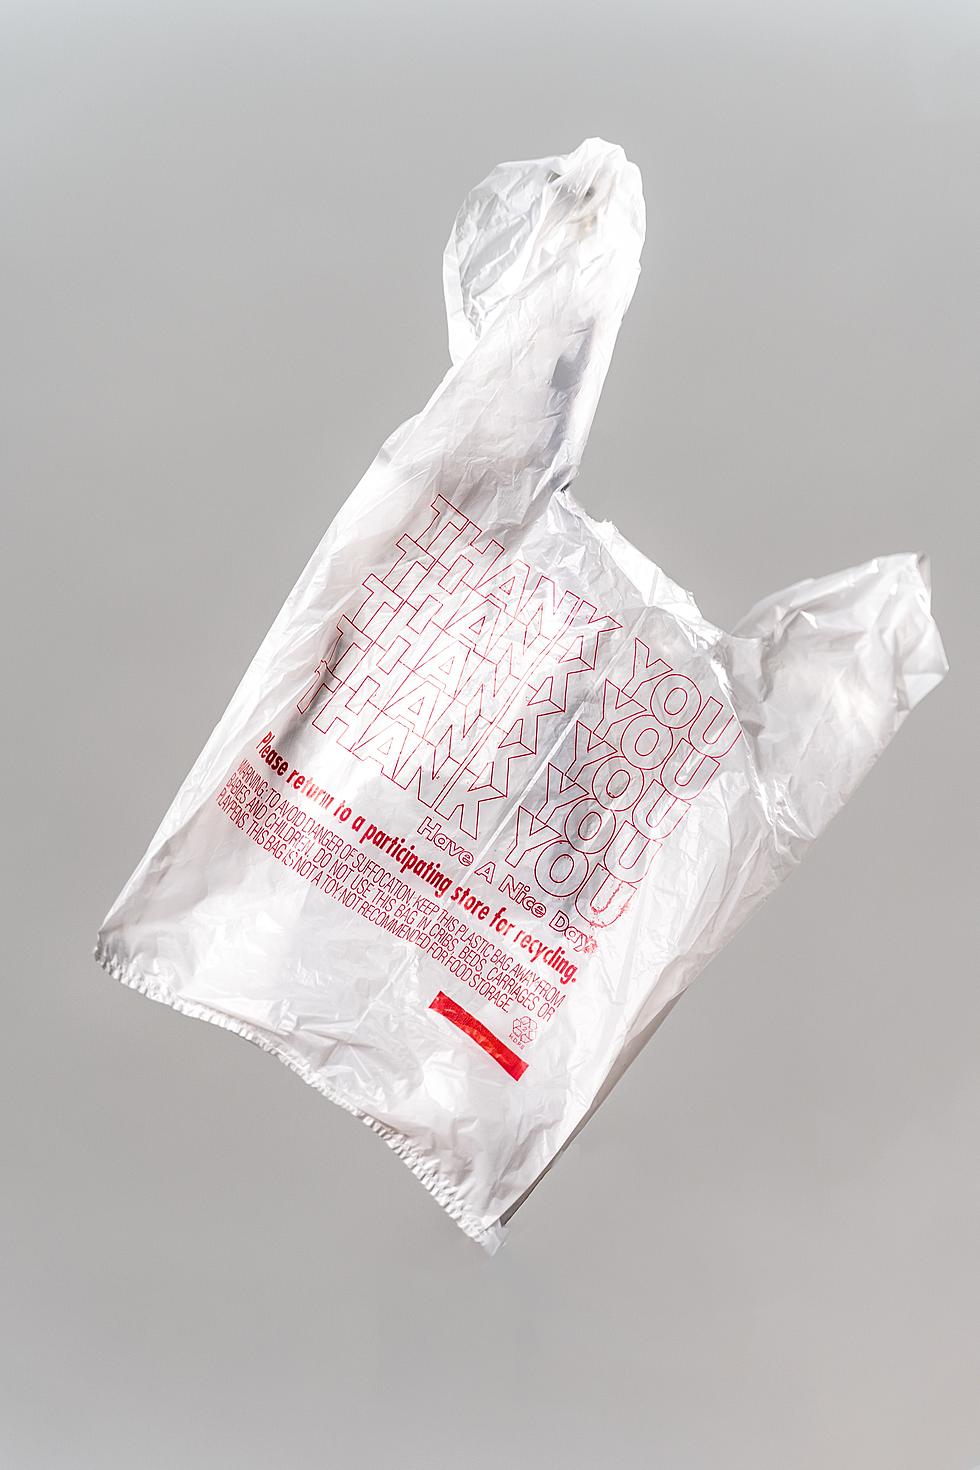 Ready to Stop Using Plastic Bags Washington?